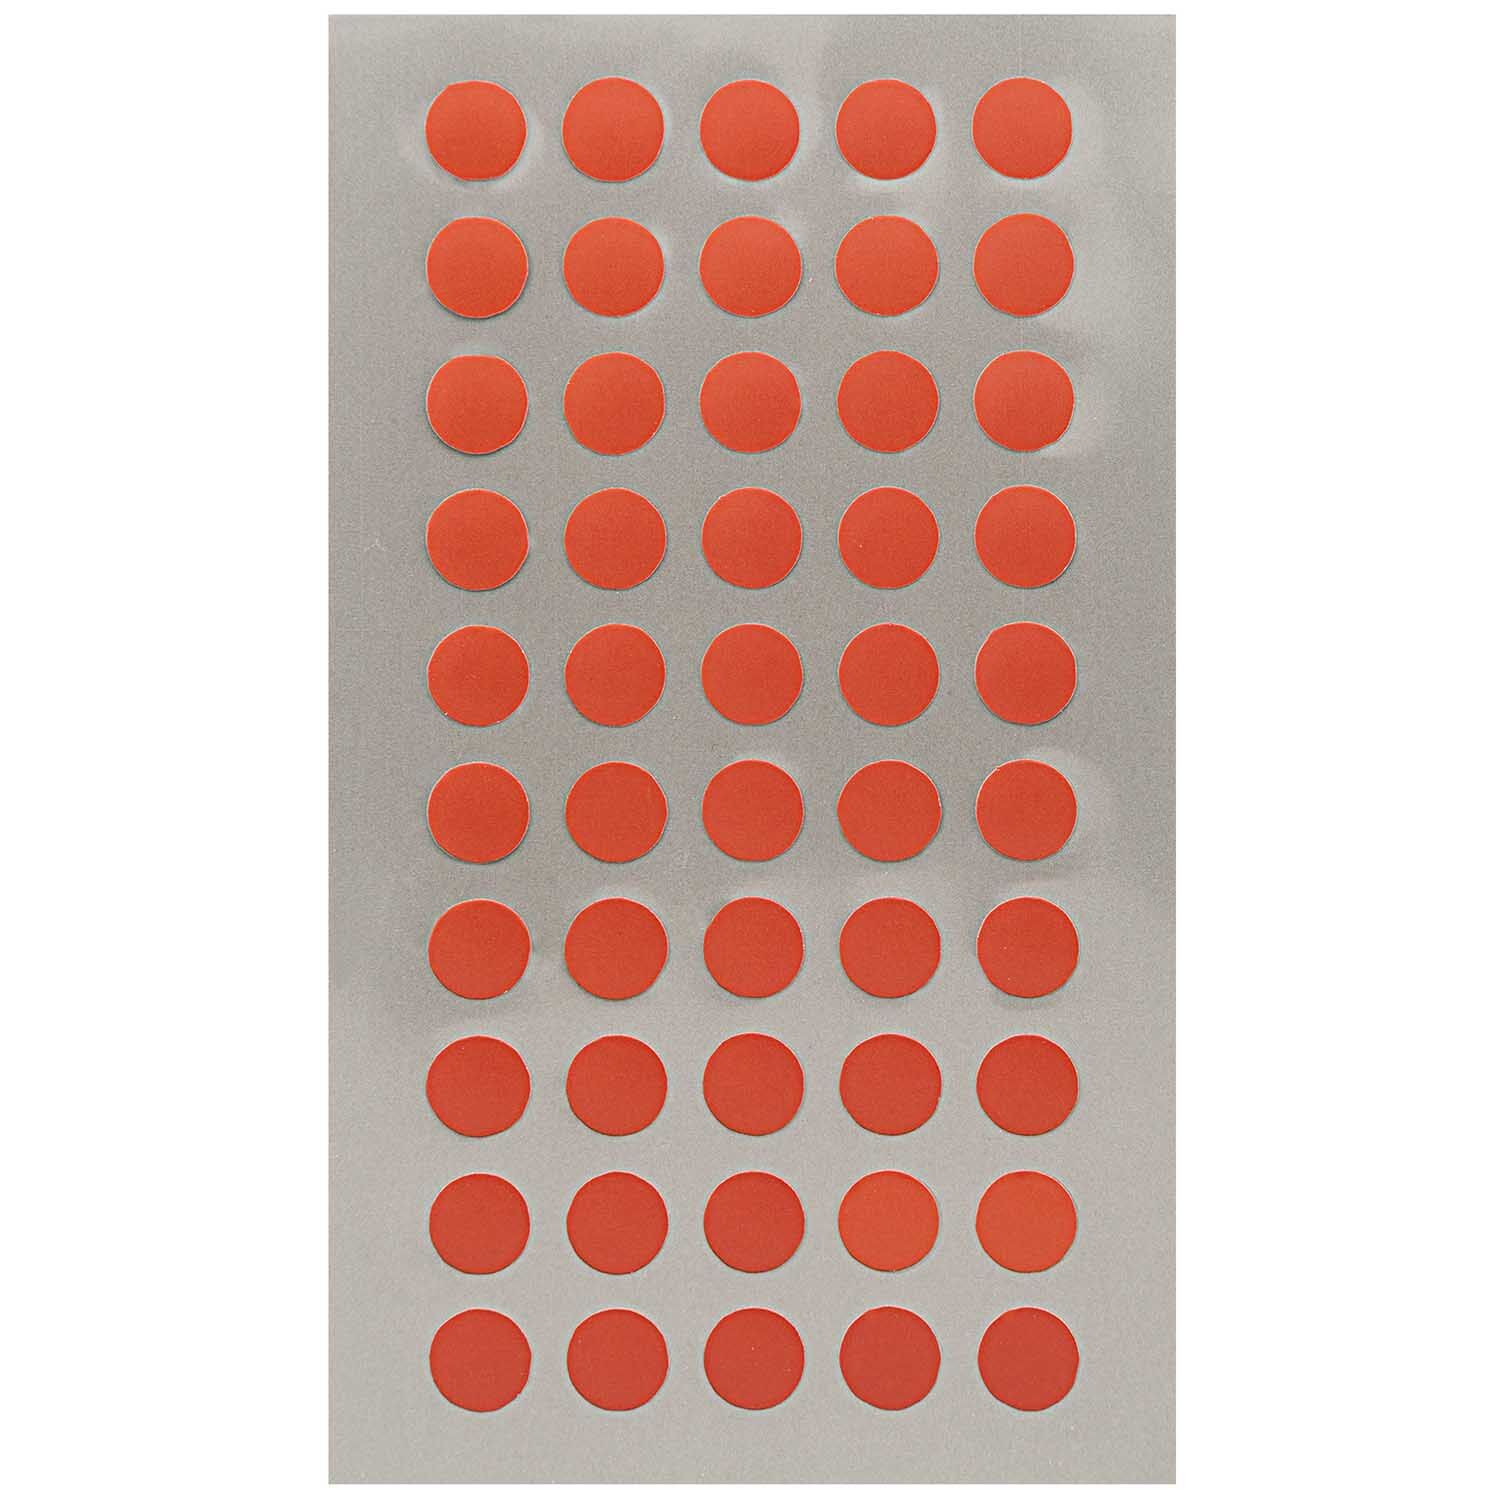 NEU Office Sticker, rote Punkte, 8 mm, 4 Blatt